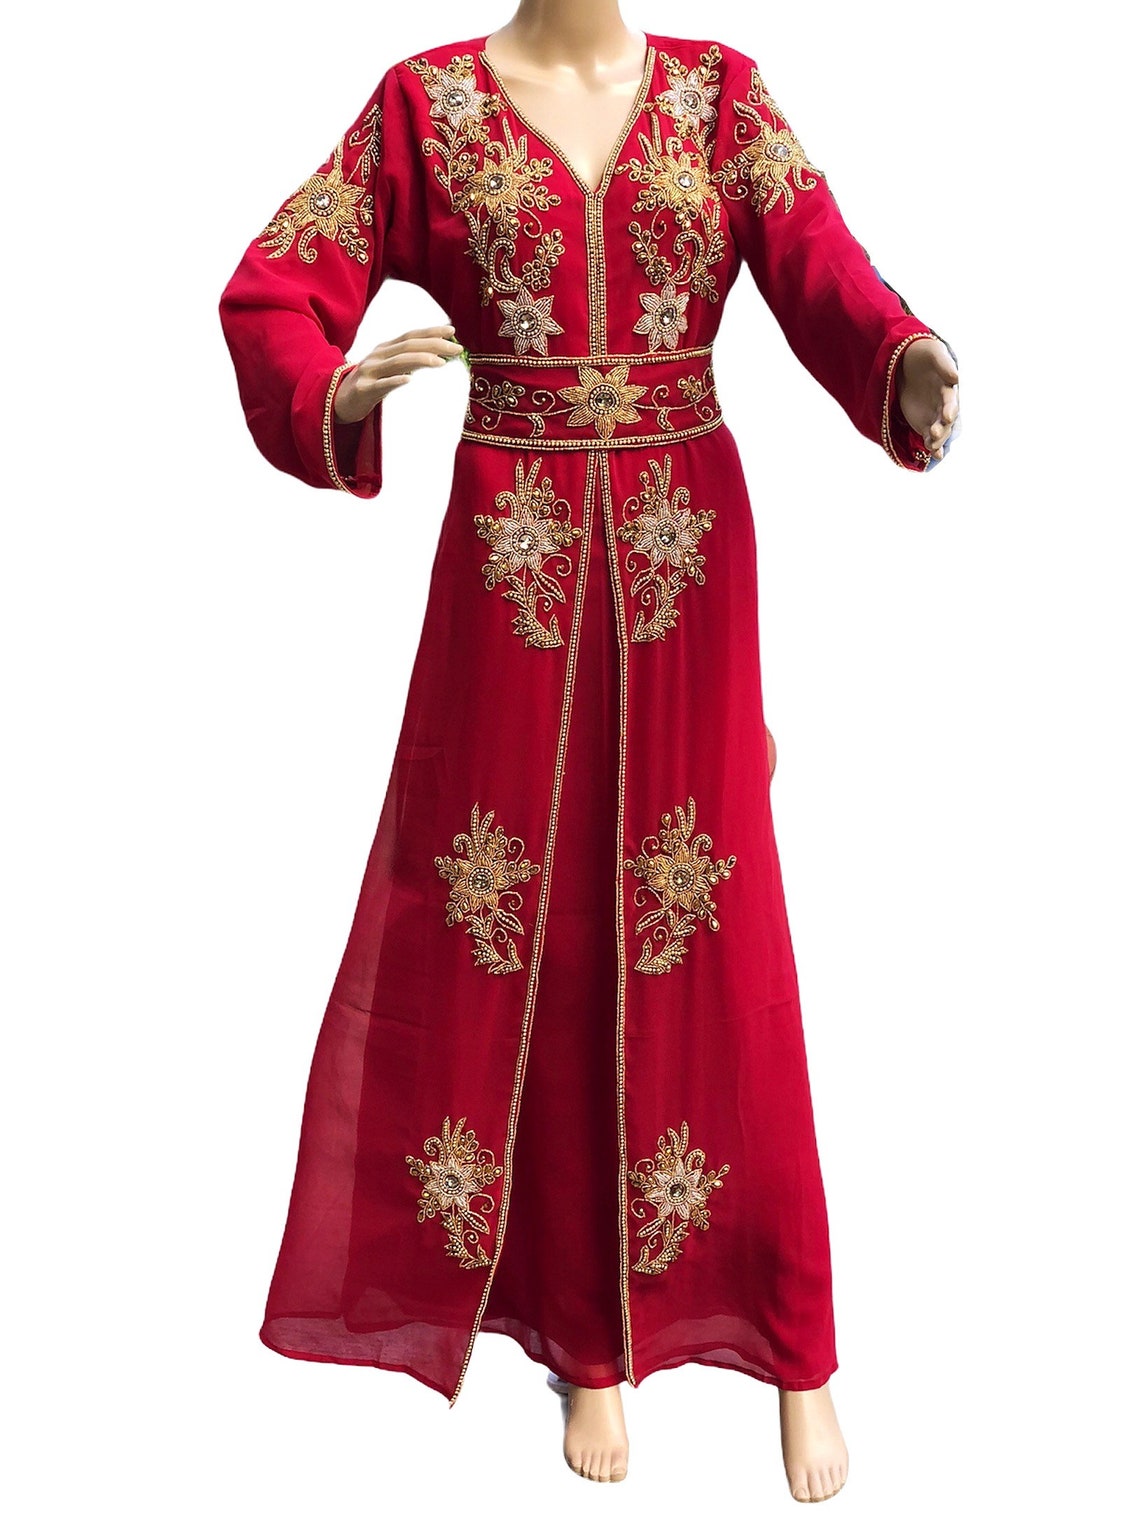 Rouge red moroccan kaftan takchita dress moroccan caftan | Etsy